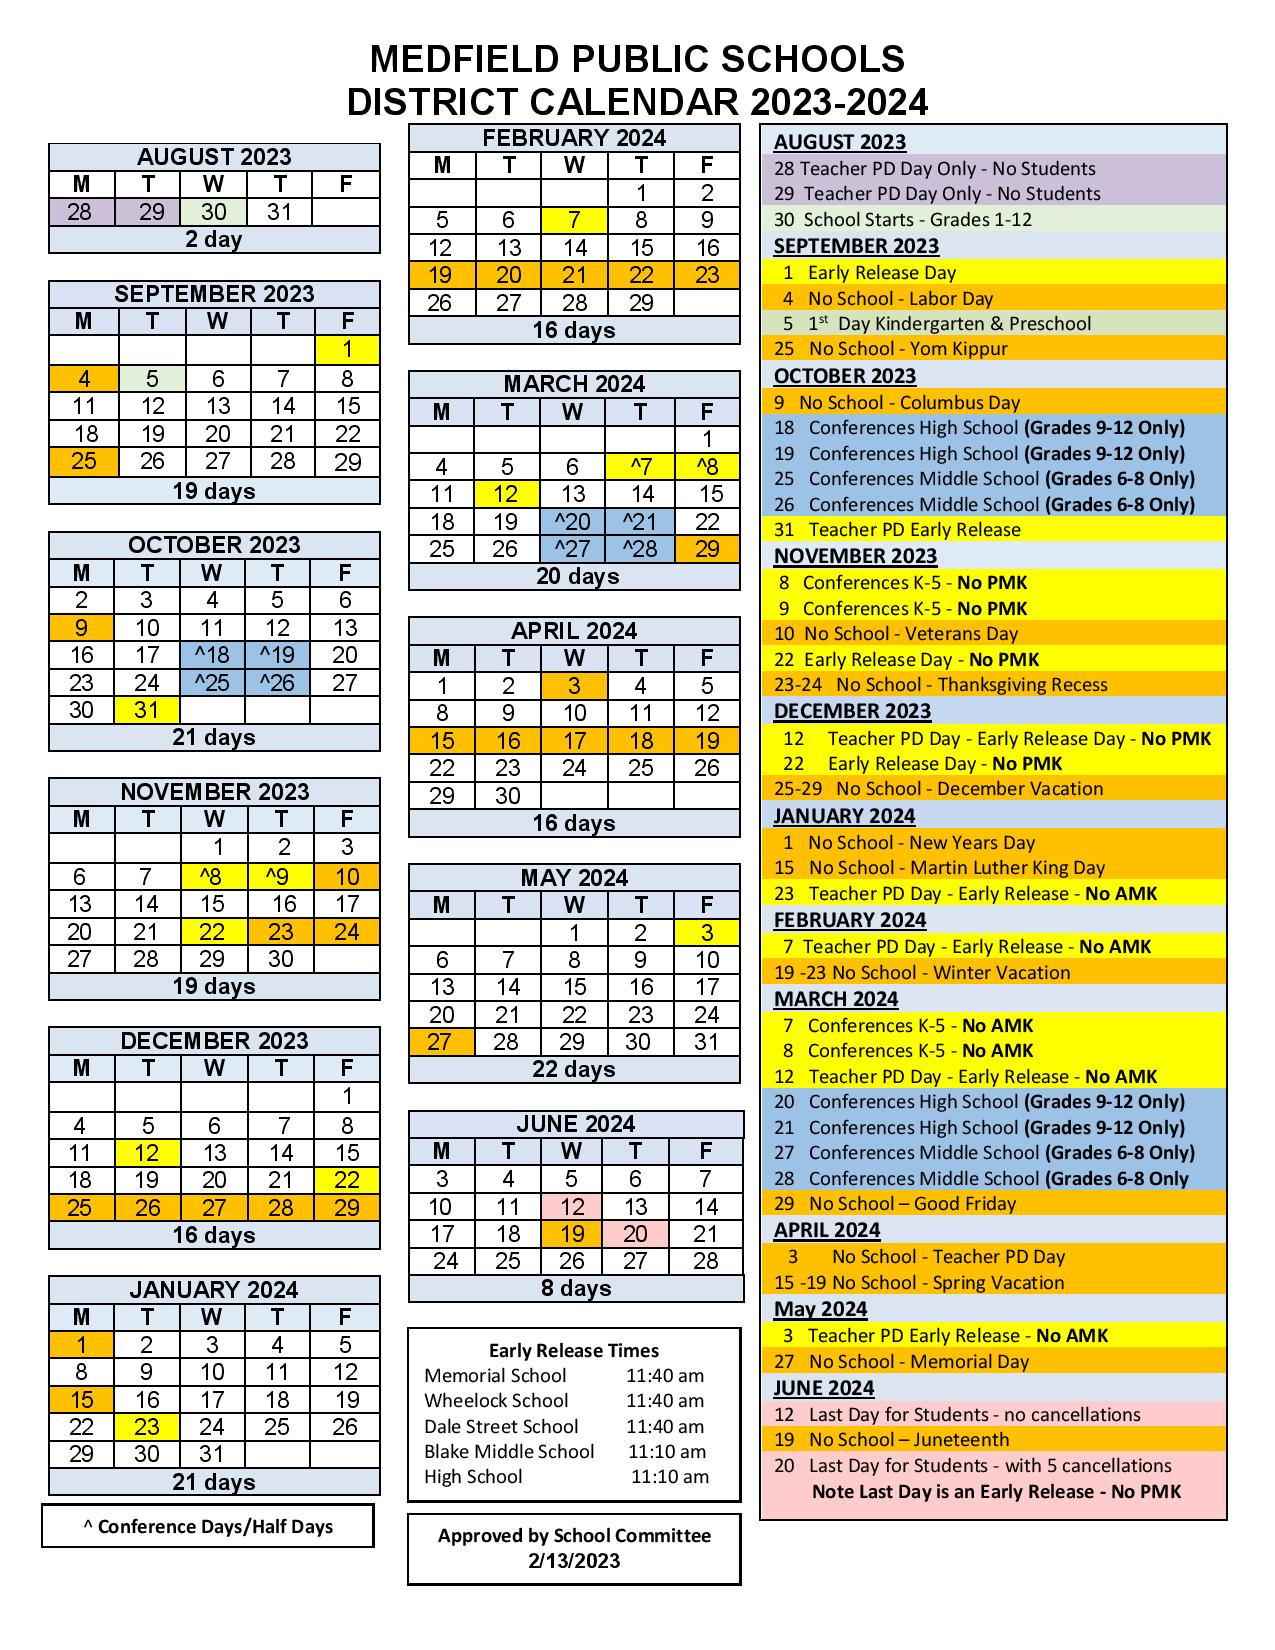 Medfield Public Schools Calendar 20232024 in PDF